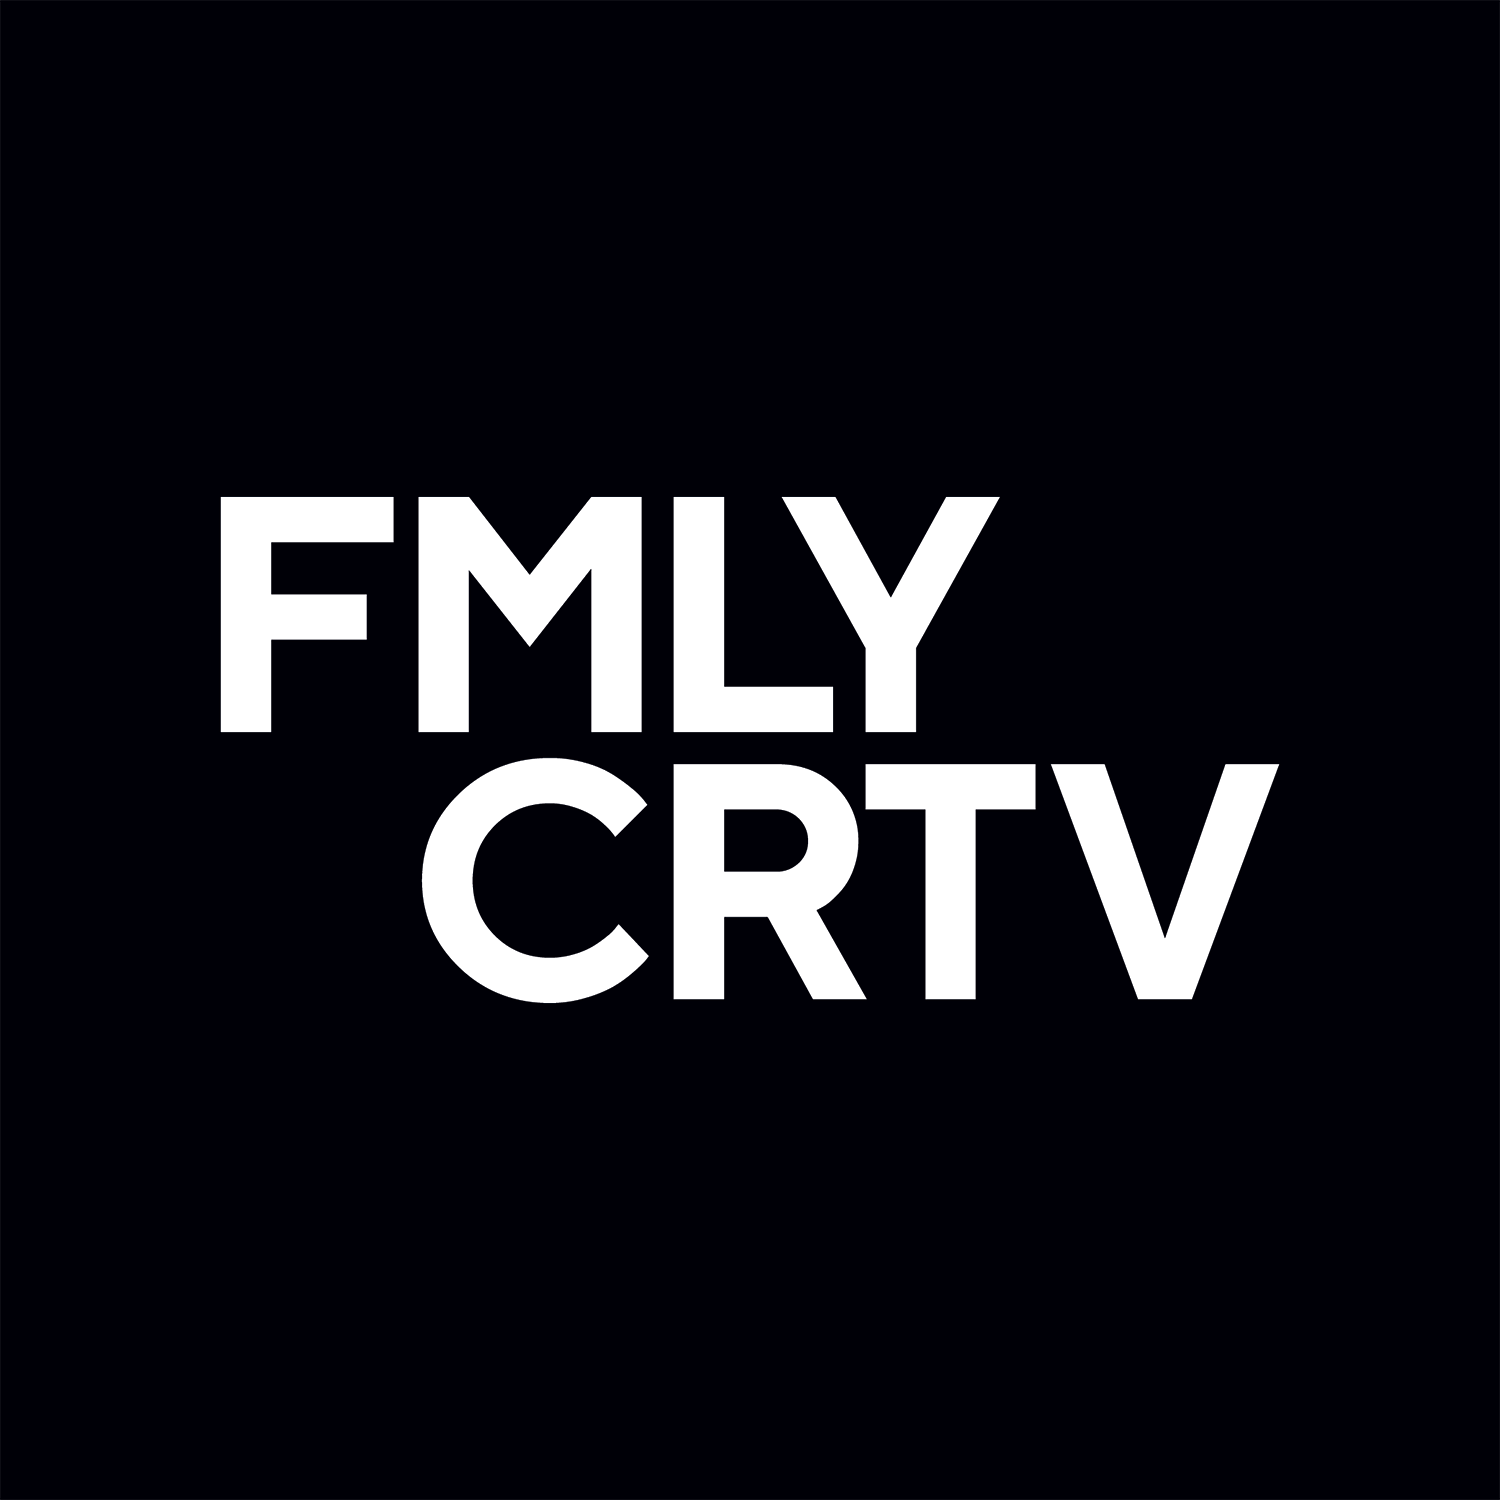 FMLY CRTV (Family Creative)